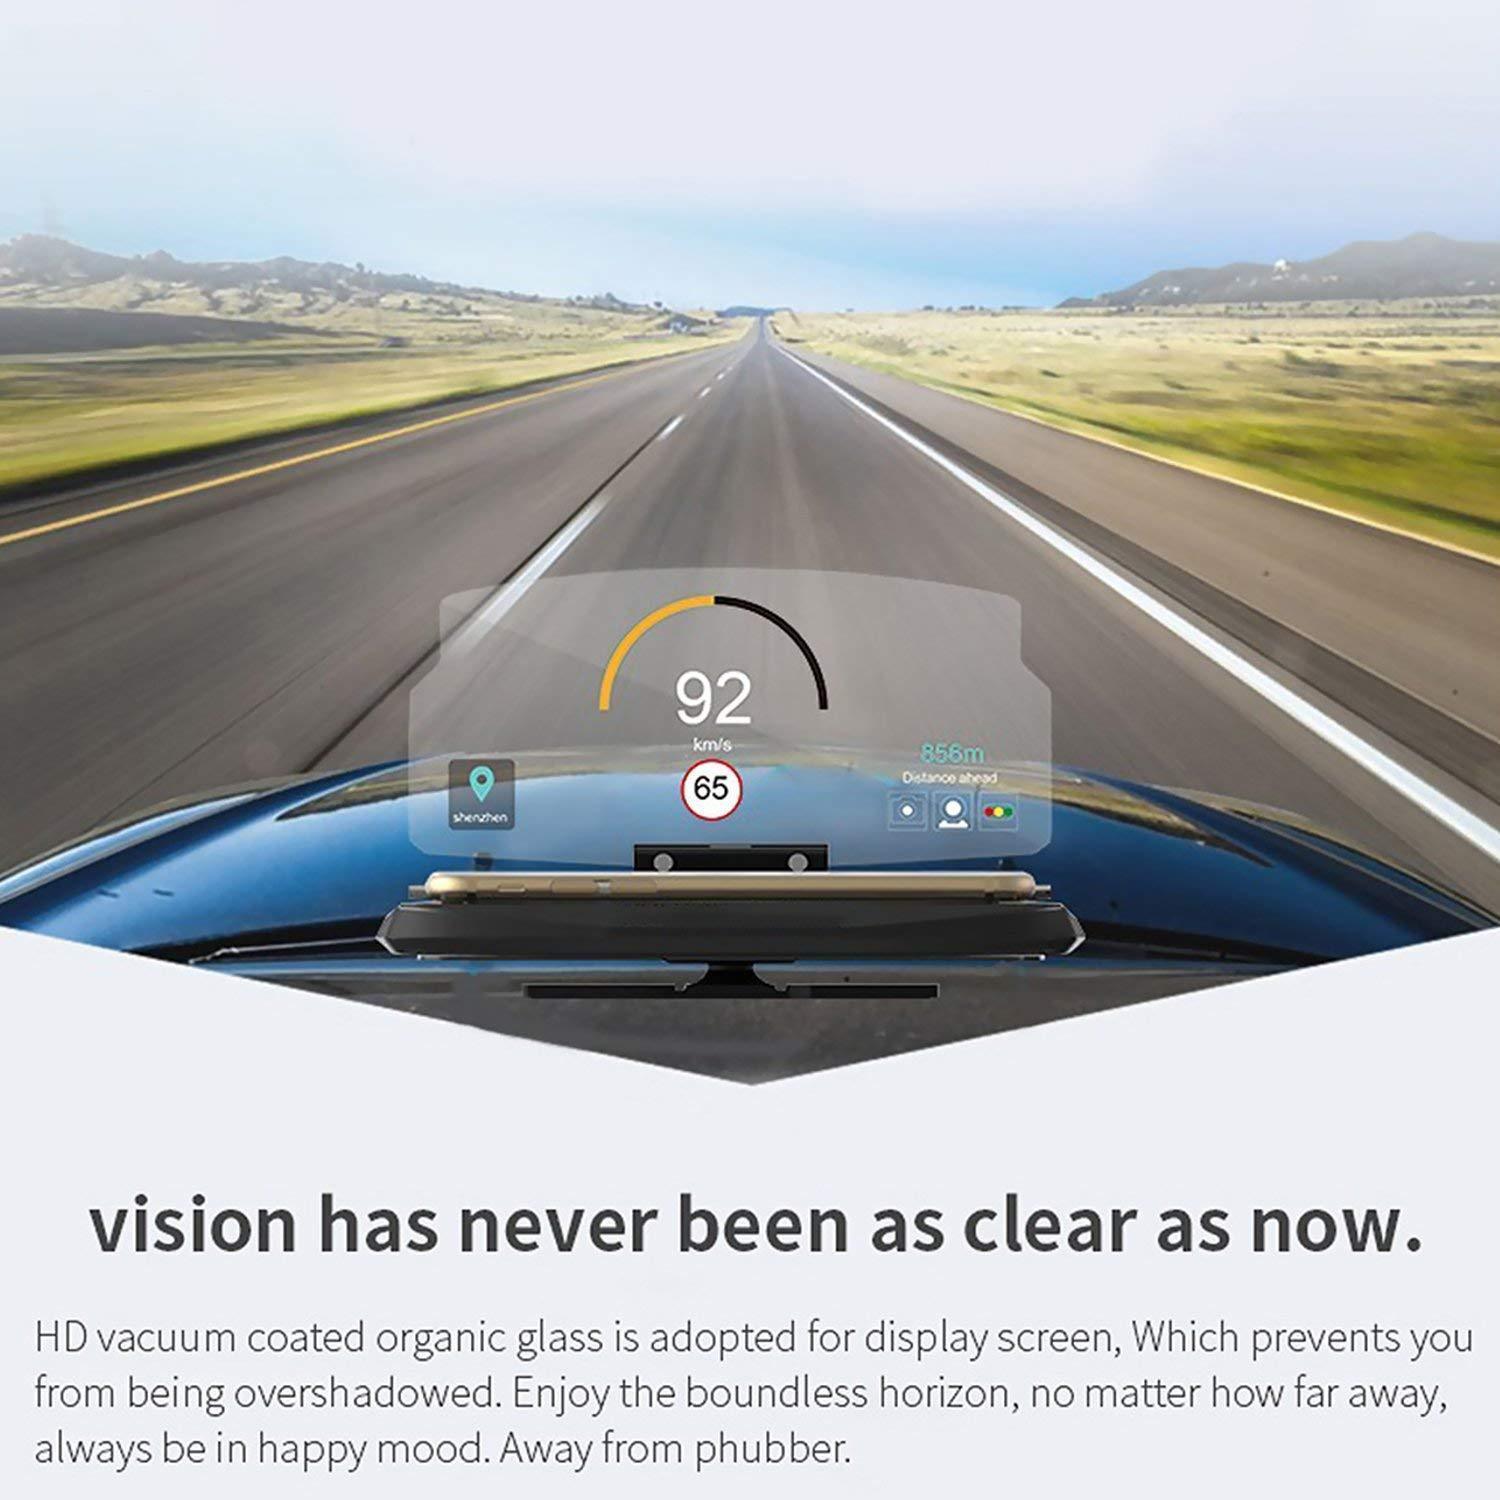 Heads Up Display Car HUD Phone GPS Navigation Image Reflector